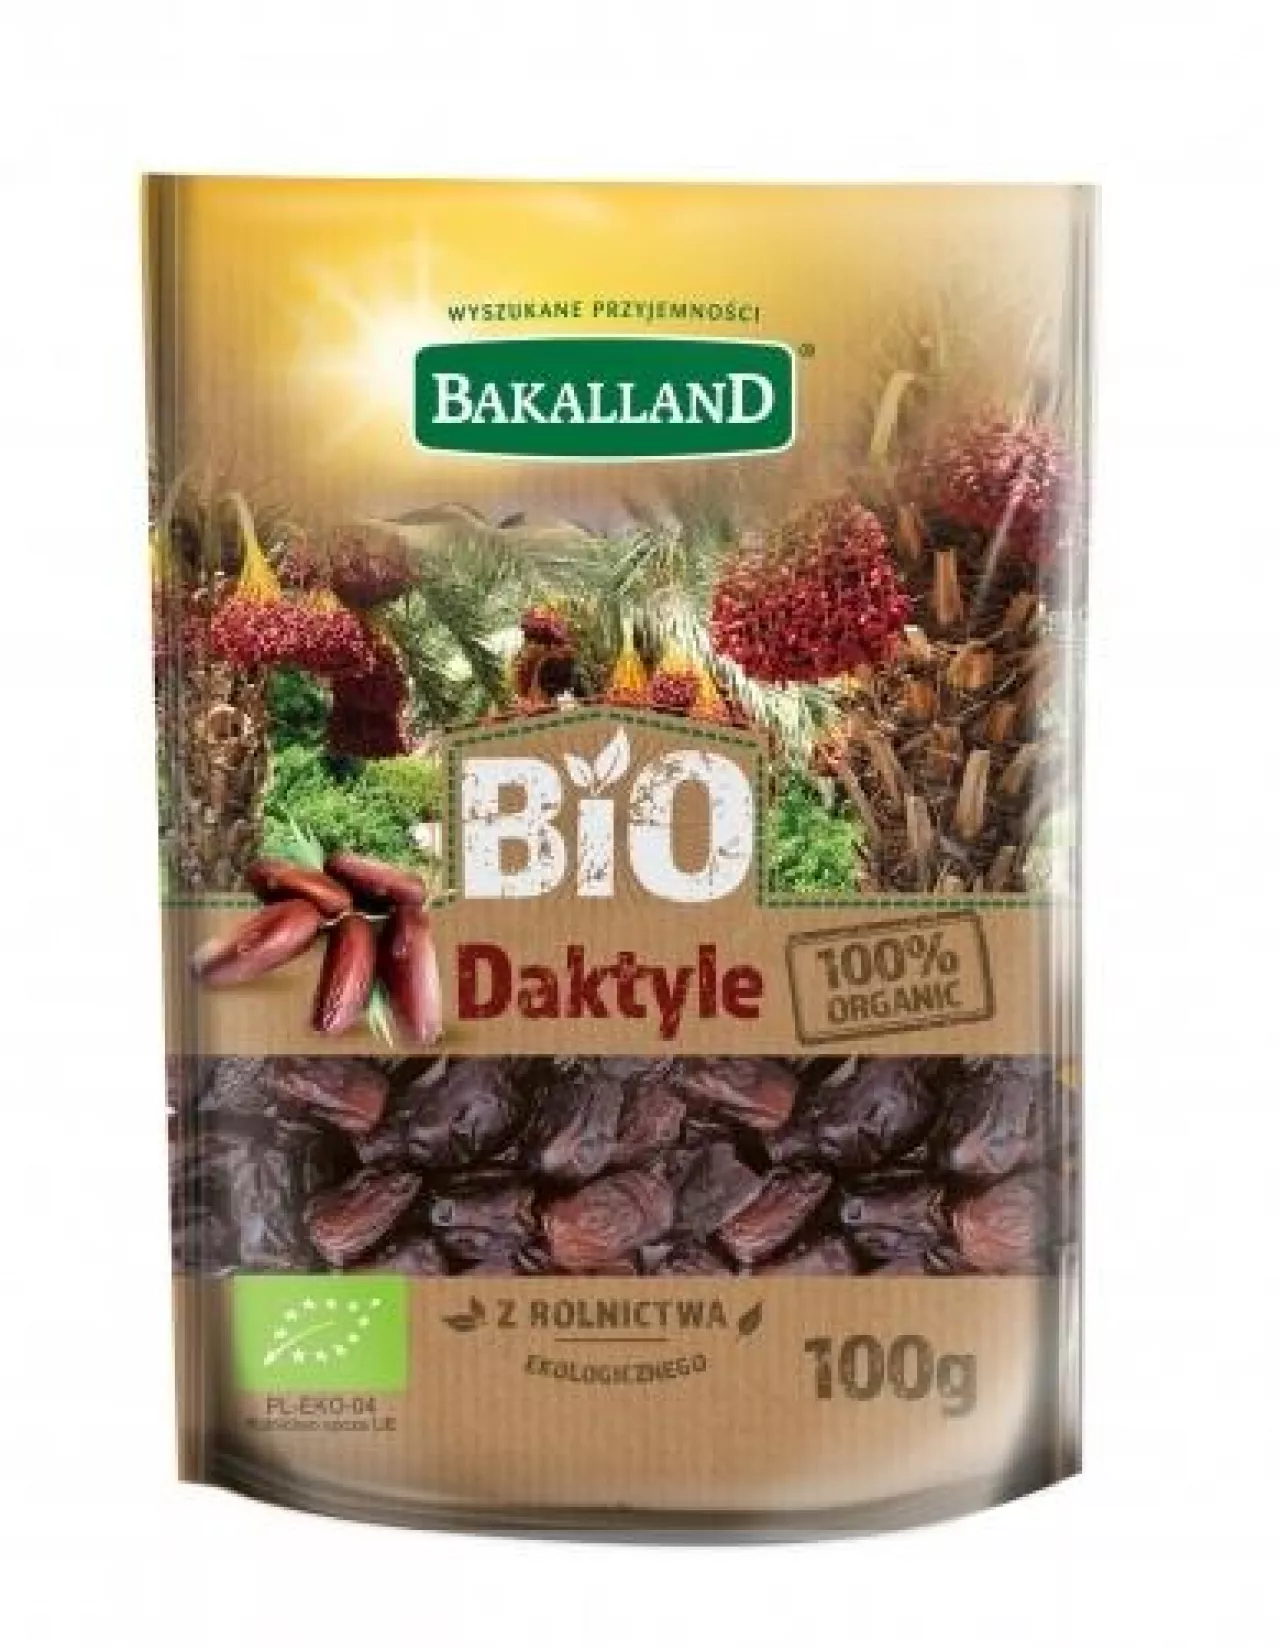 BIO Daktyle Bakalland (100g) ((materiał partnera))